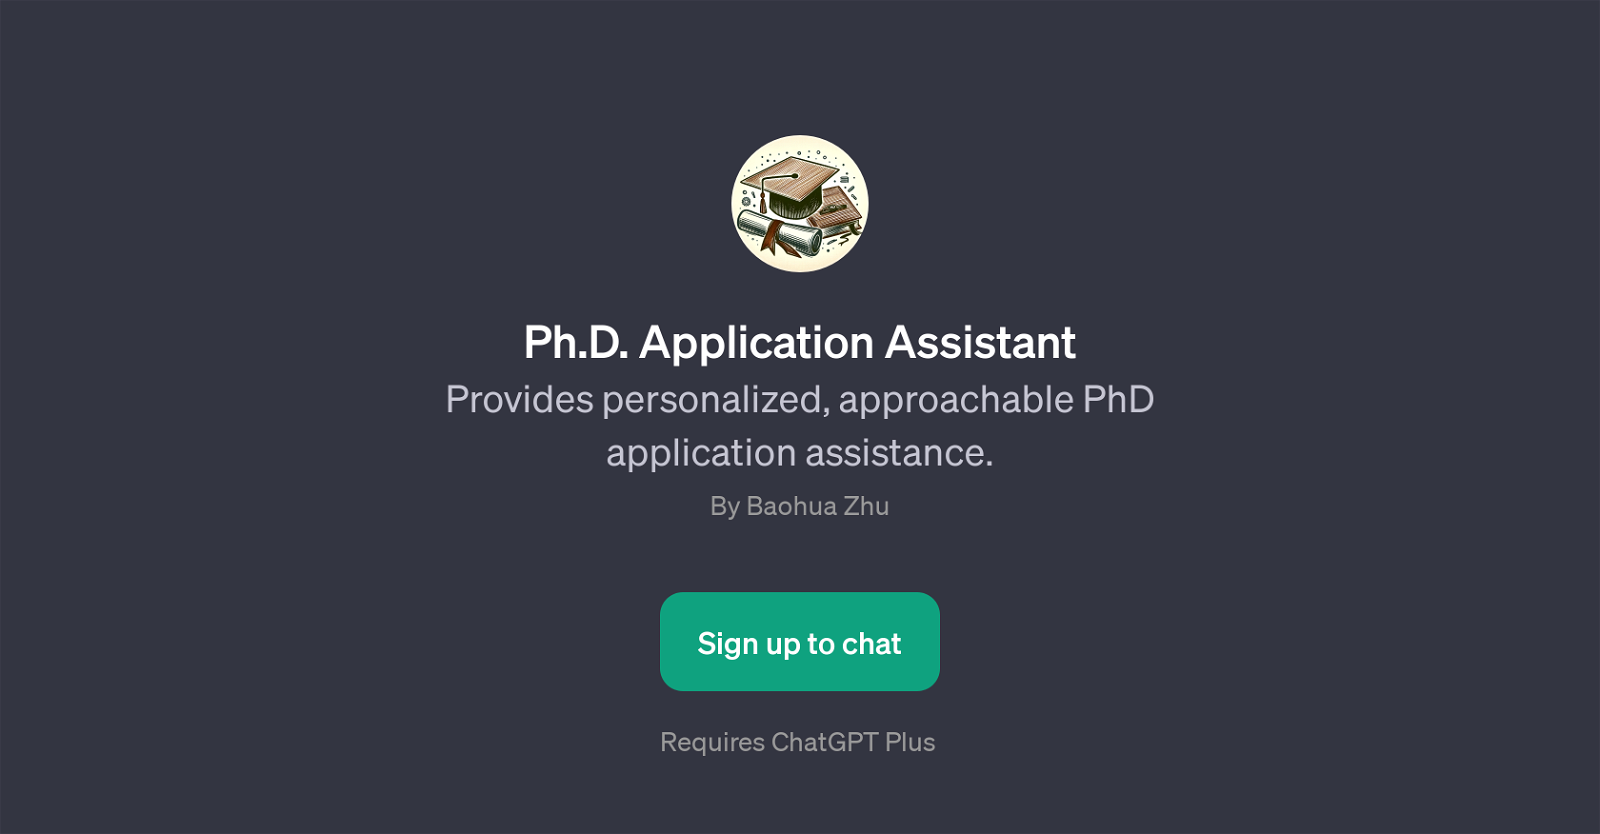 Ph.D. Application Assistant website